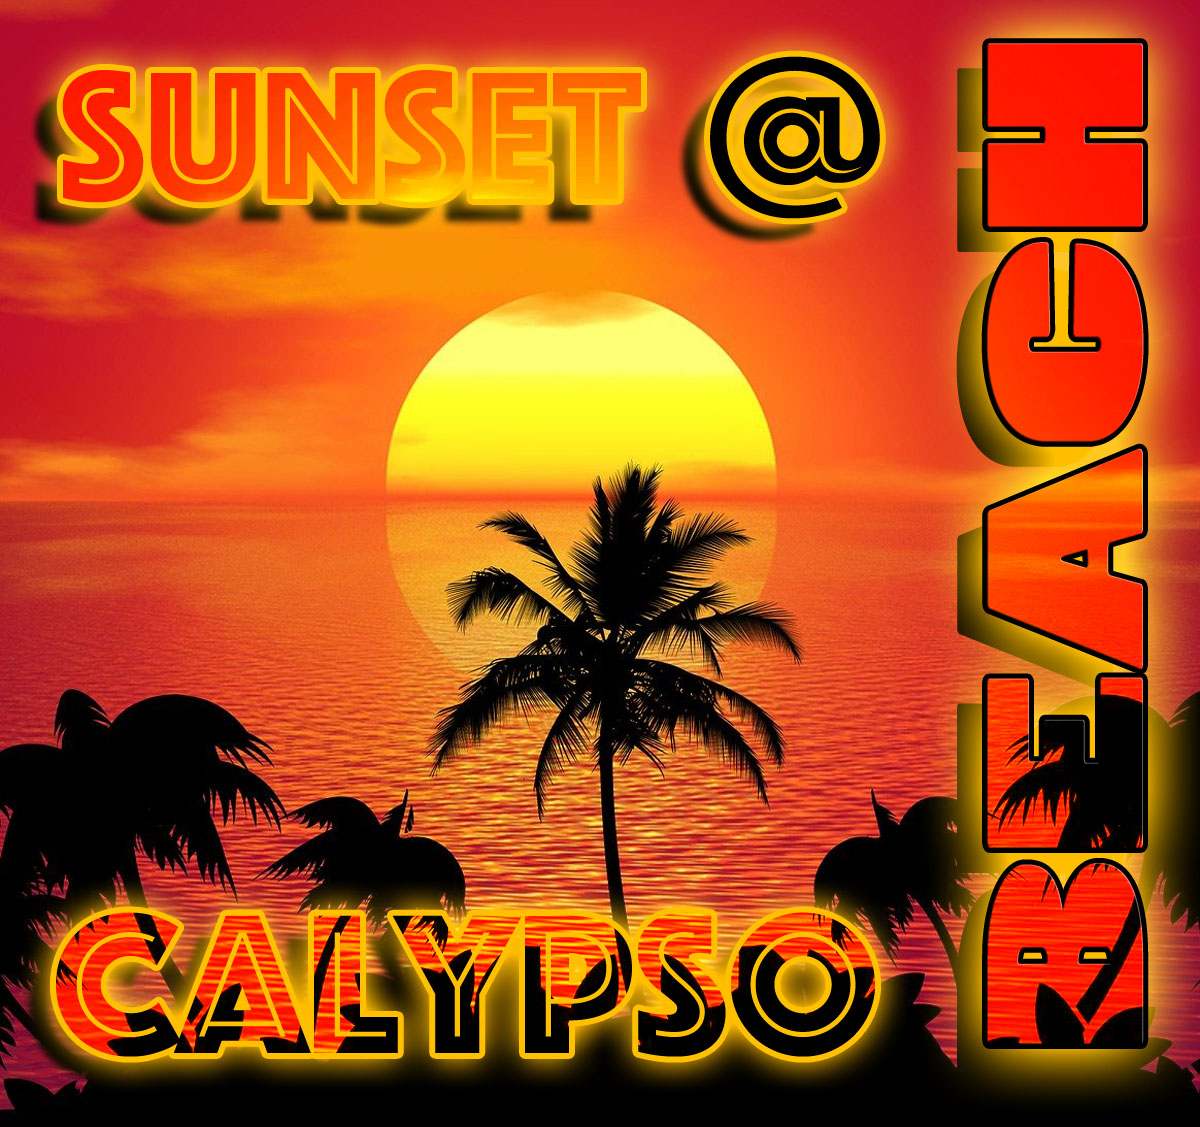 Sunset at Calypso Beach